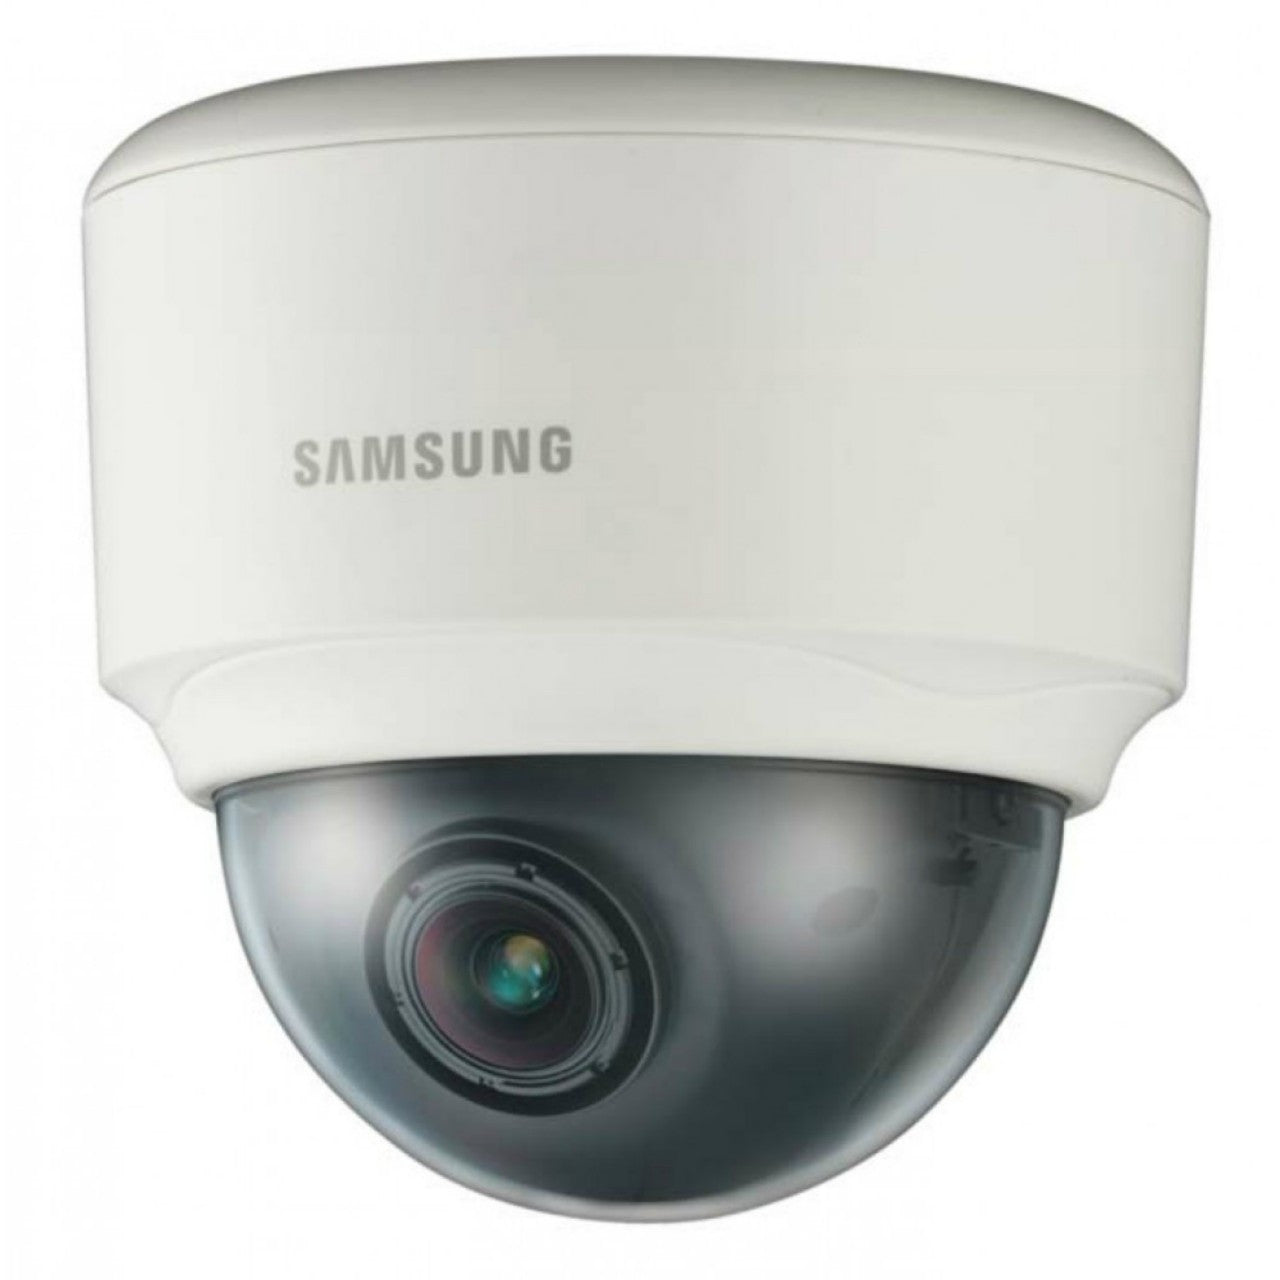 Samsung SND-7080 3 Megapixel Full HD Network Dome Camera